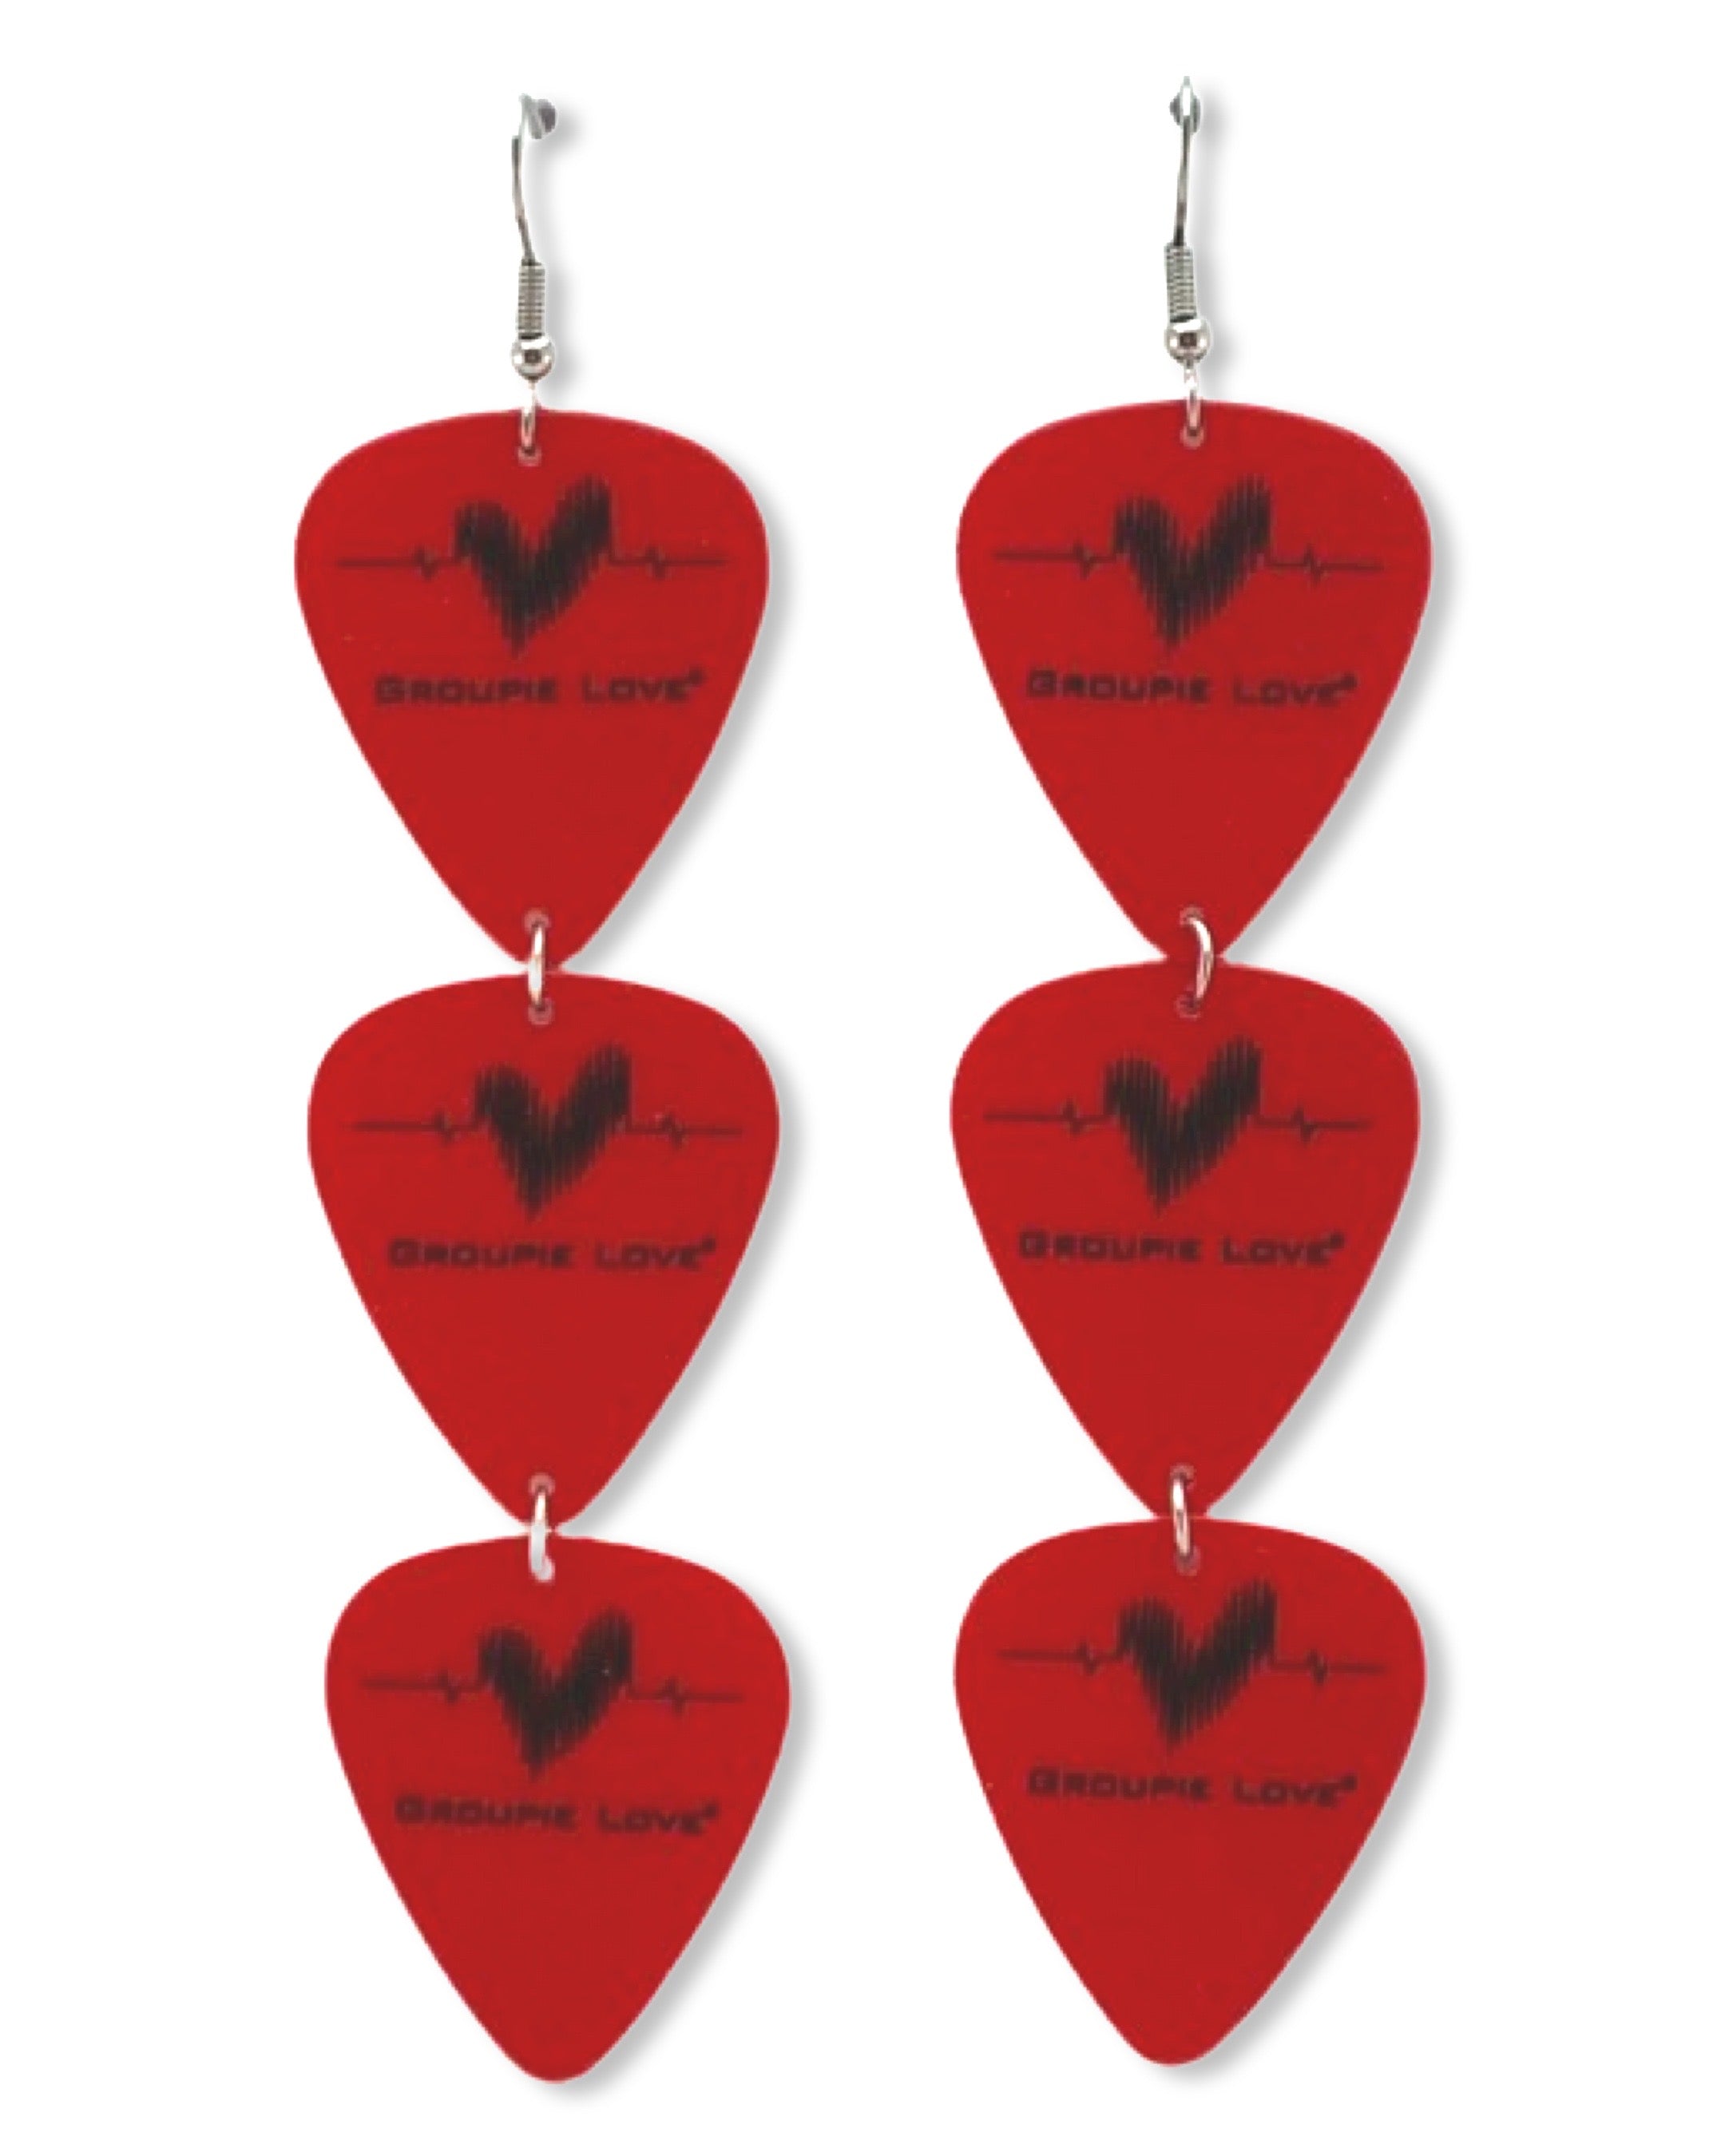 Groupie Love Red Triple Guitar Pick Earrings